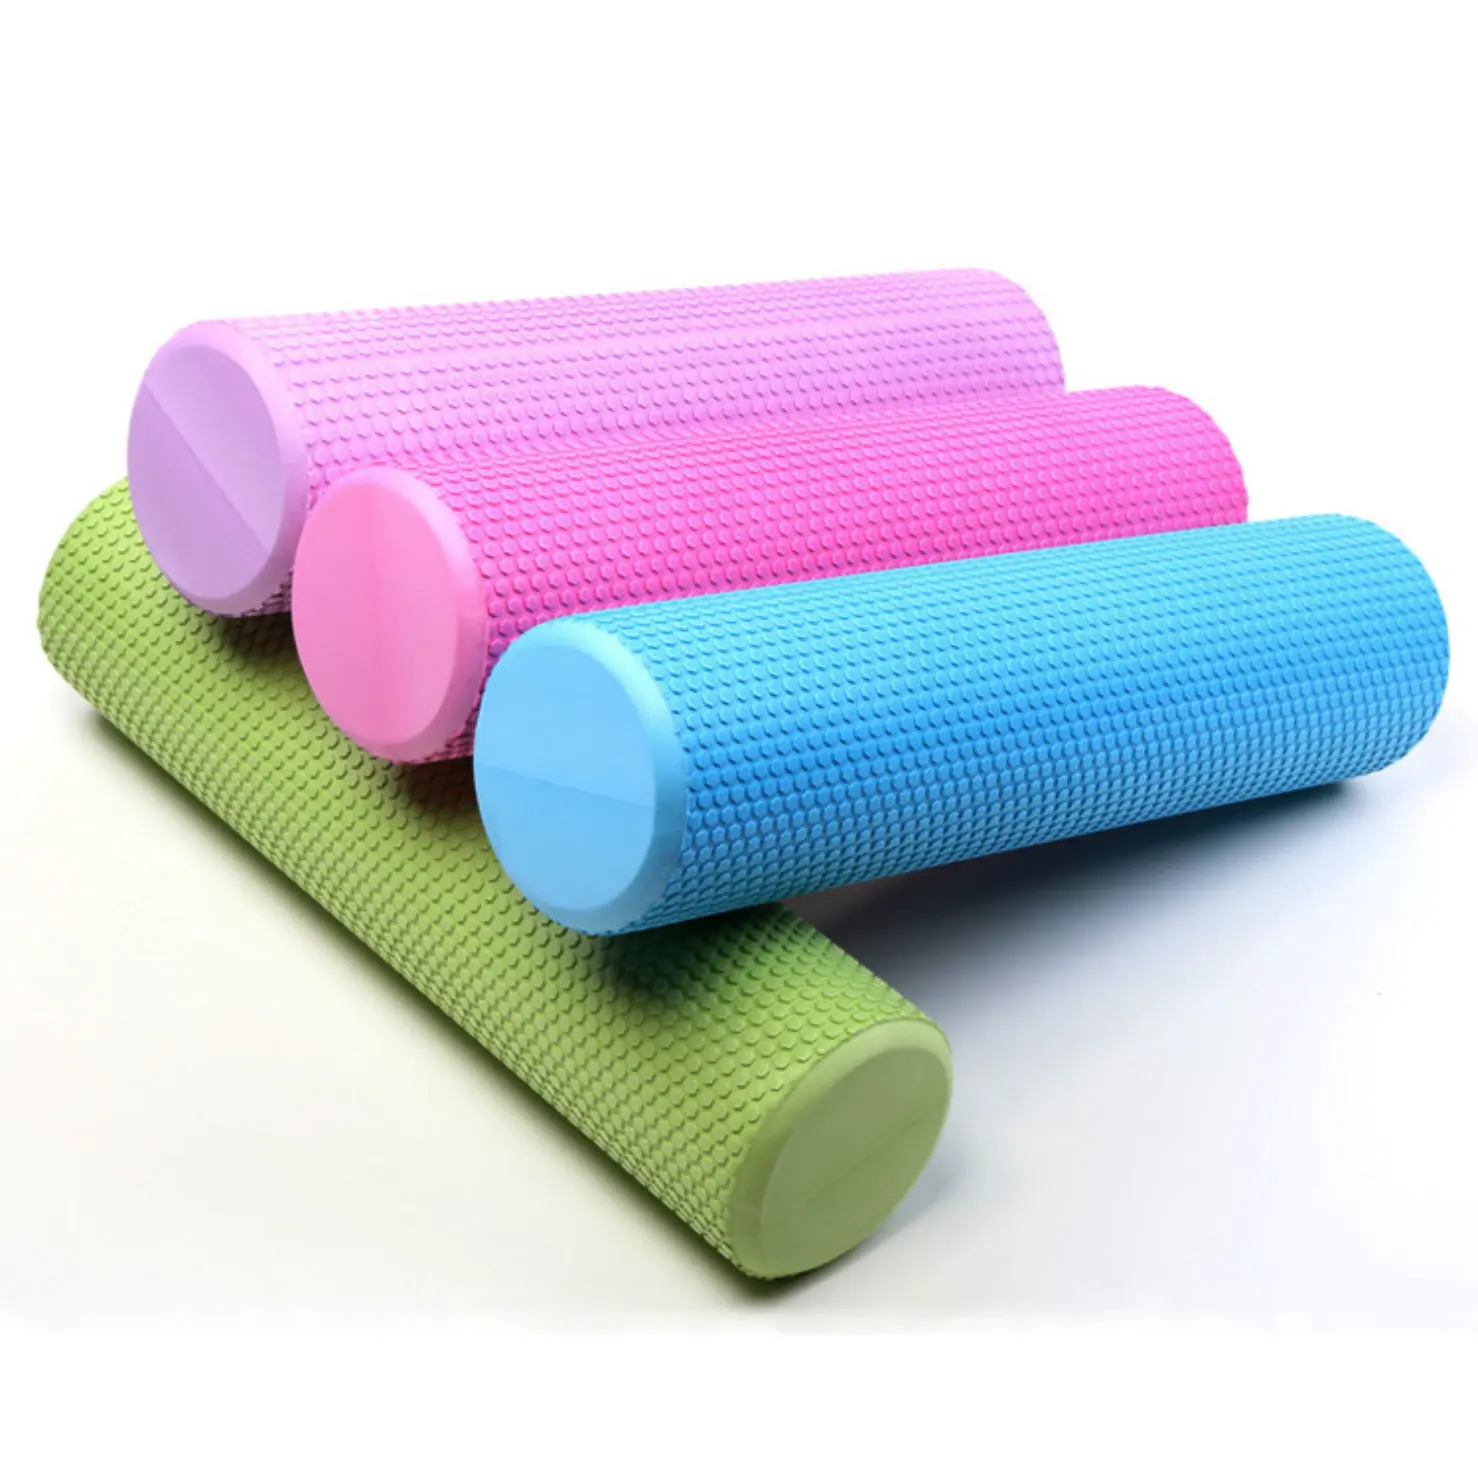 gym equipment Body Sport and Fitness Massage roller foam roller